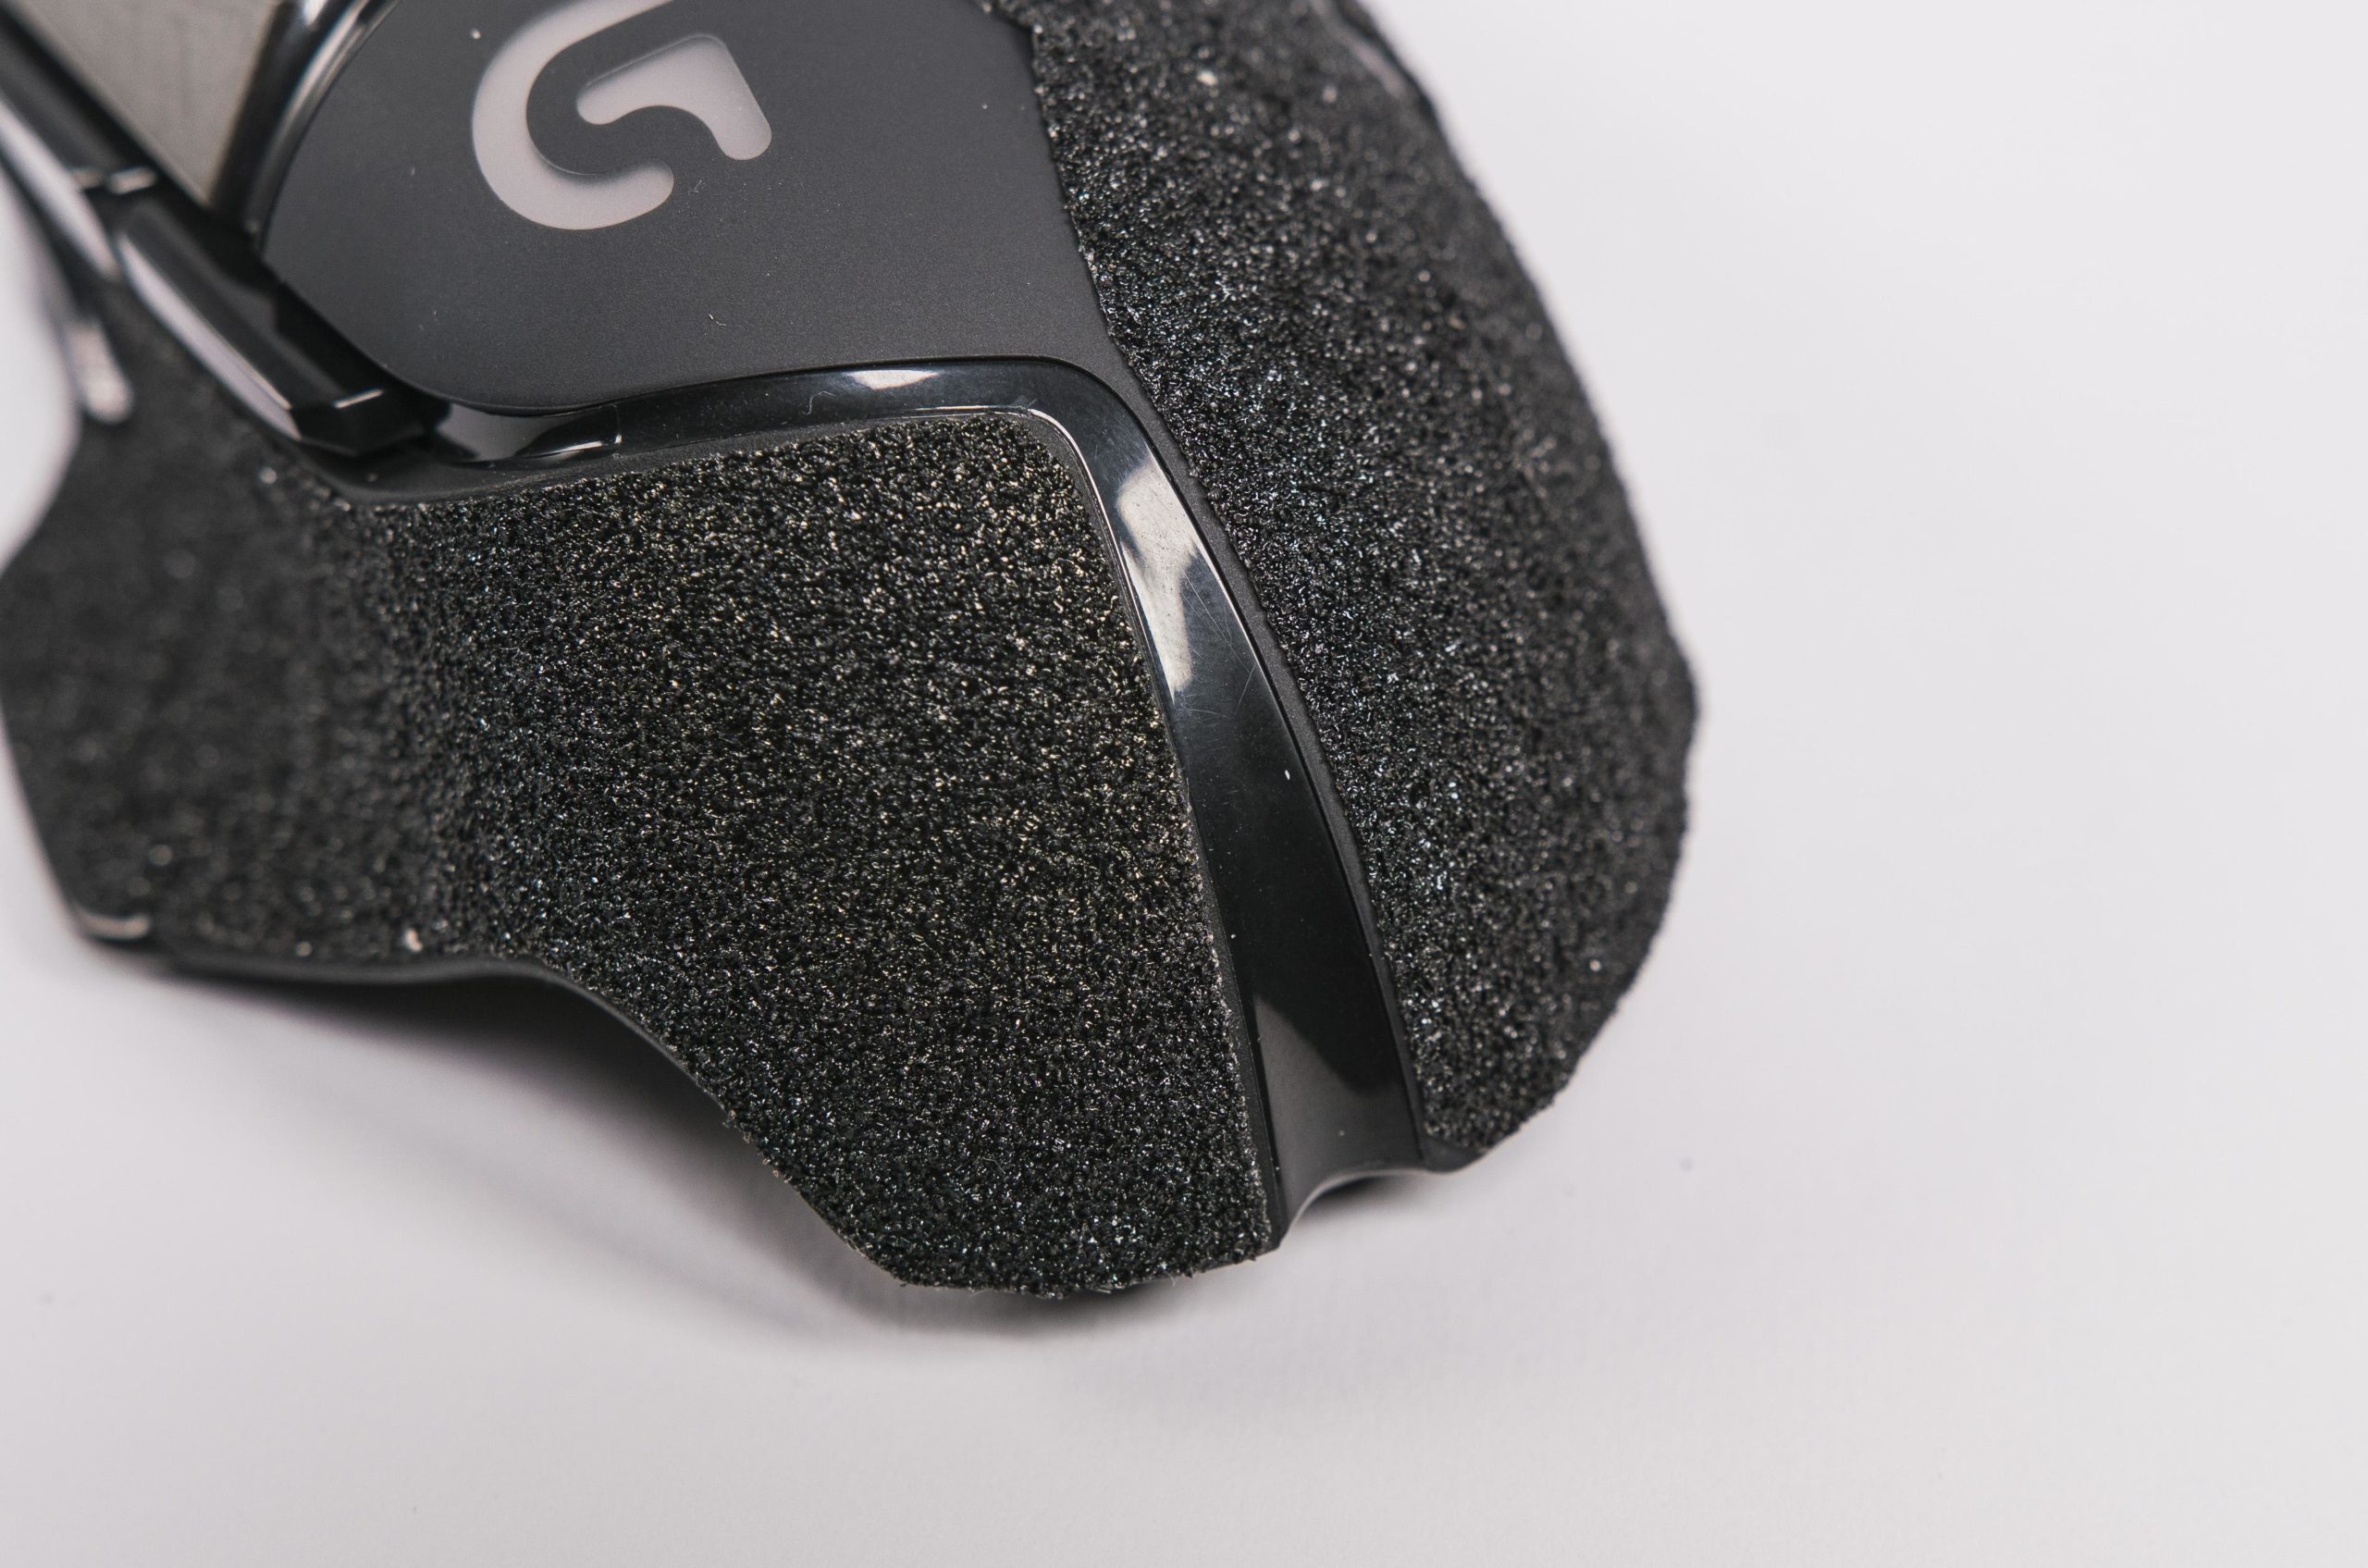 Logitech G502 Antgrip • Antgrip - Upgrade your mouse.